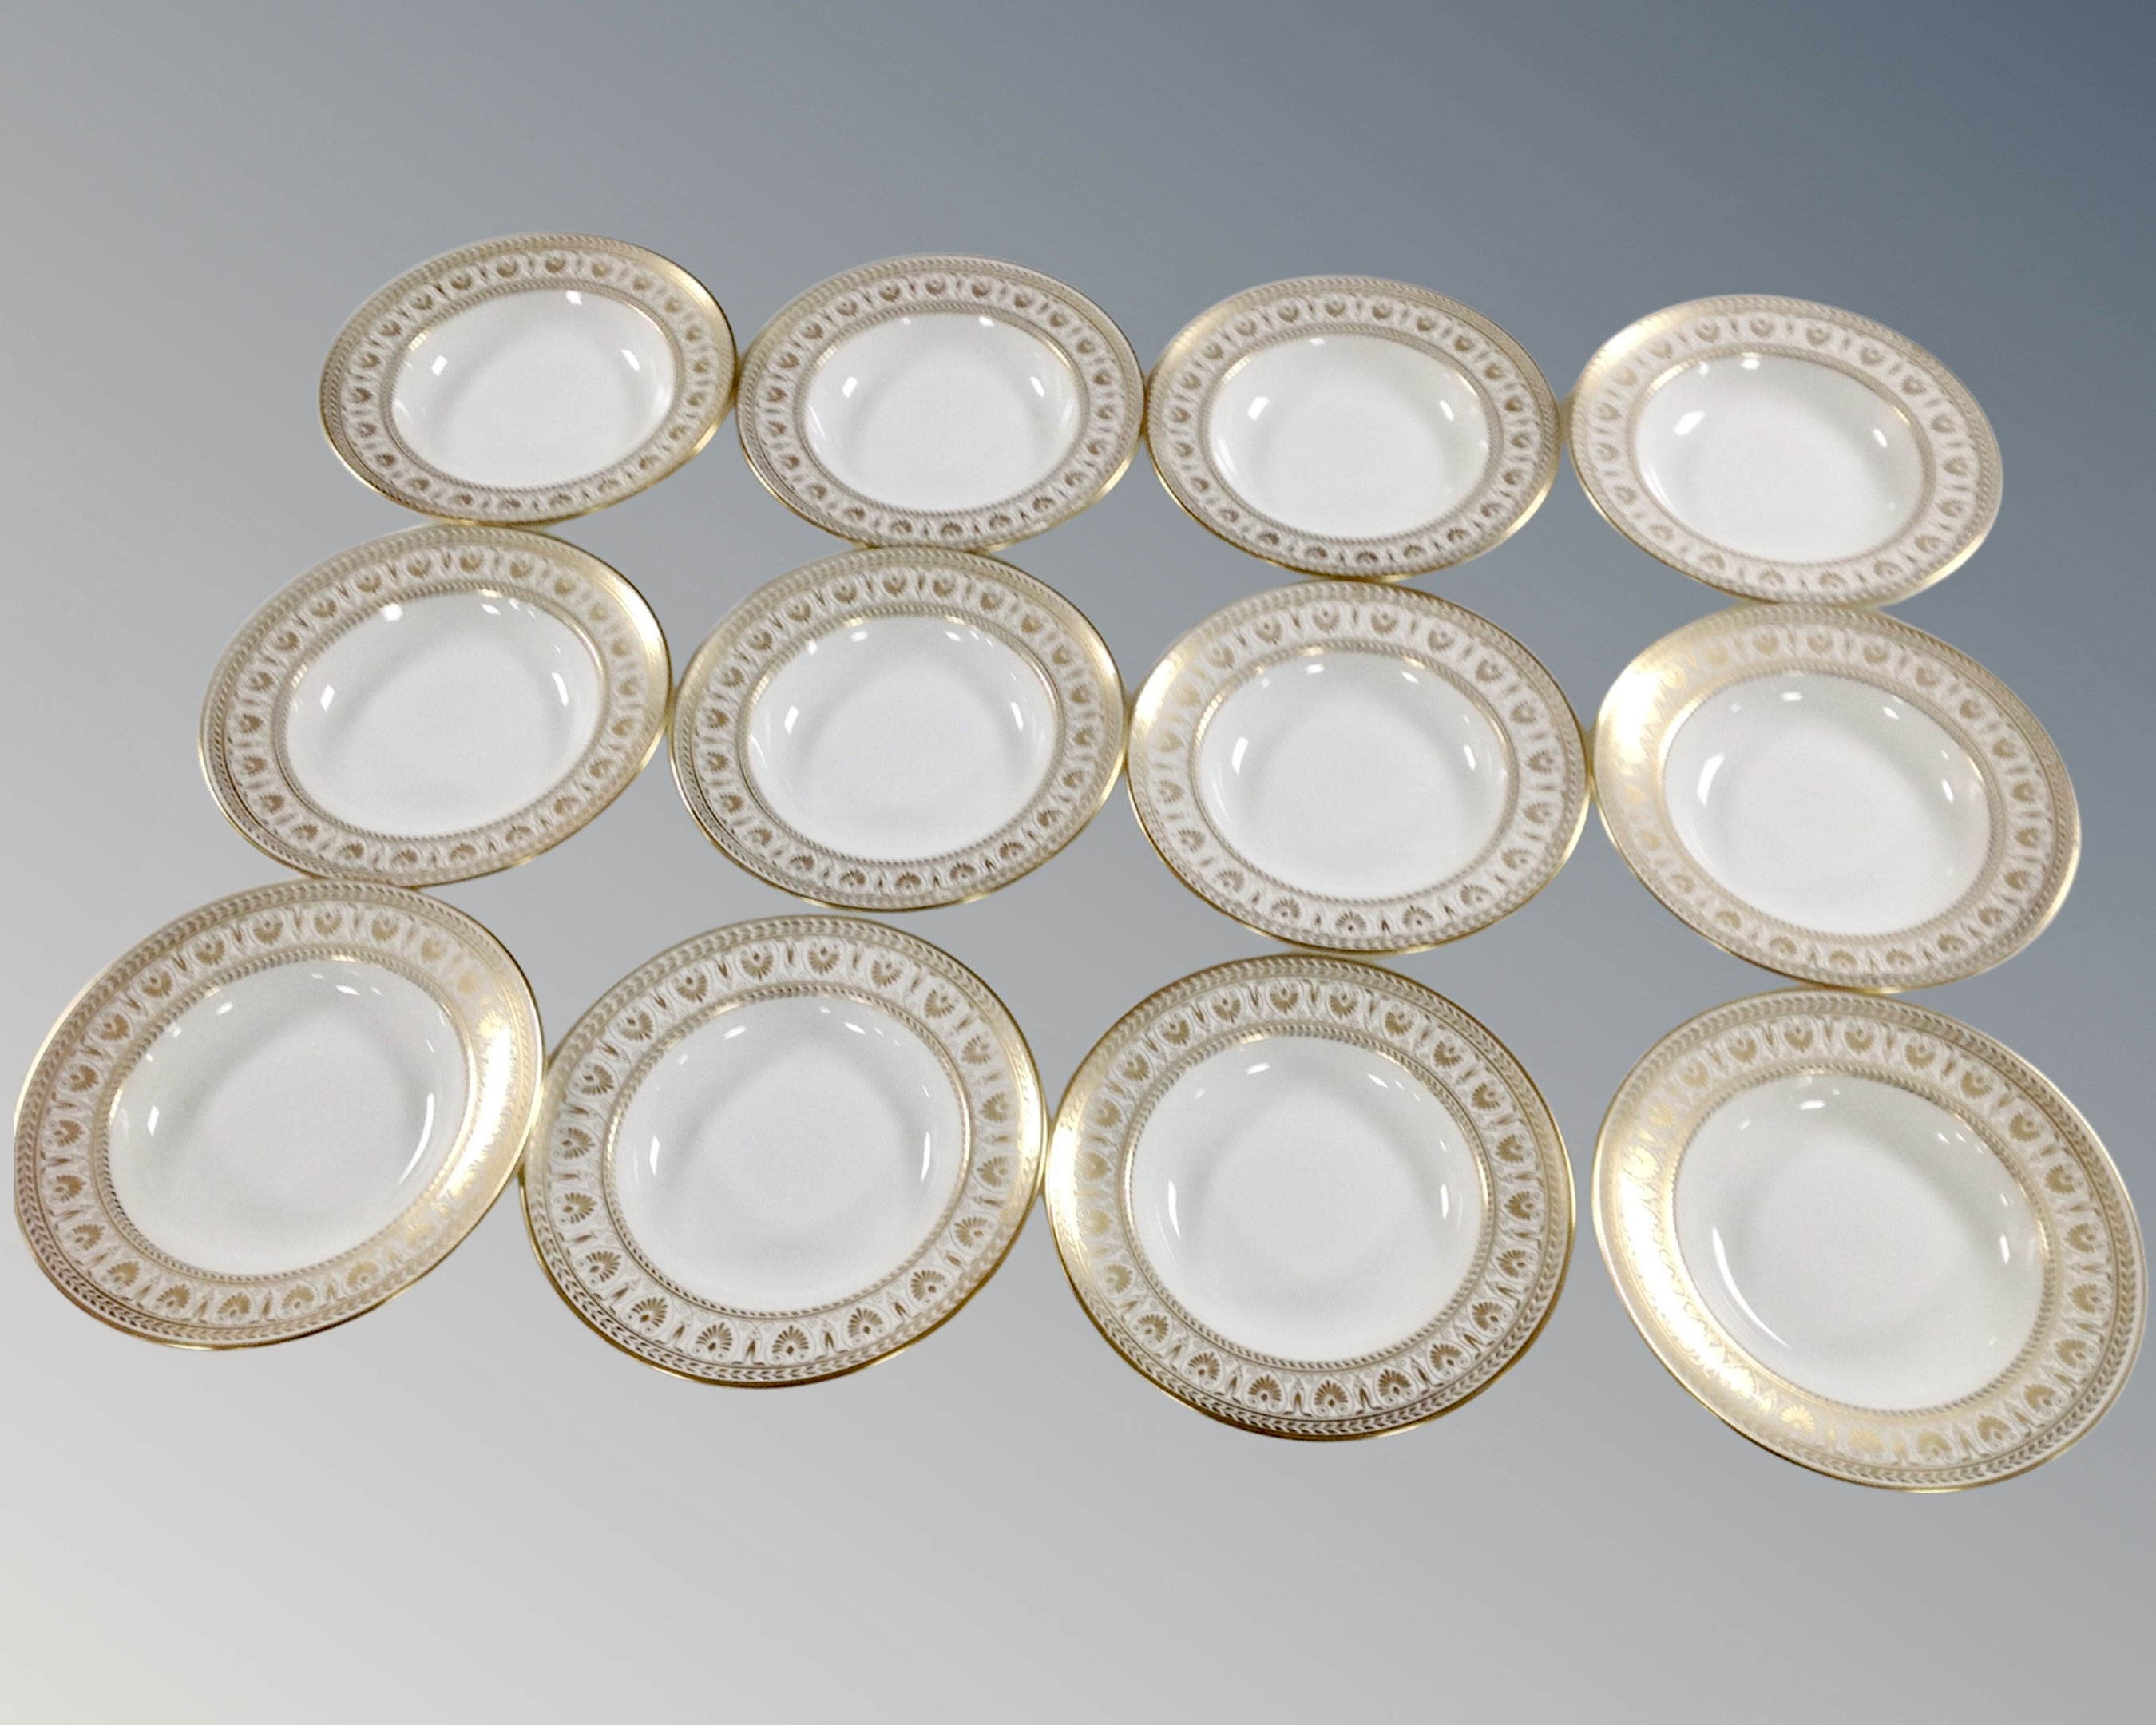 A set of 12 Crown Staffordshire white and gilt bone china bowls.